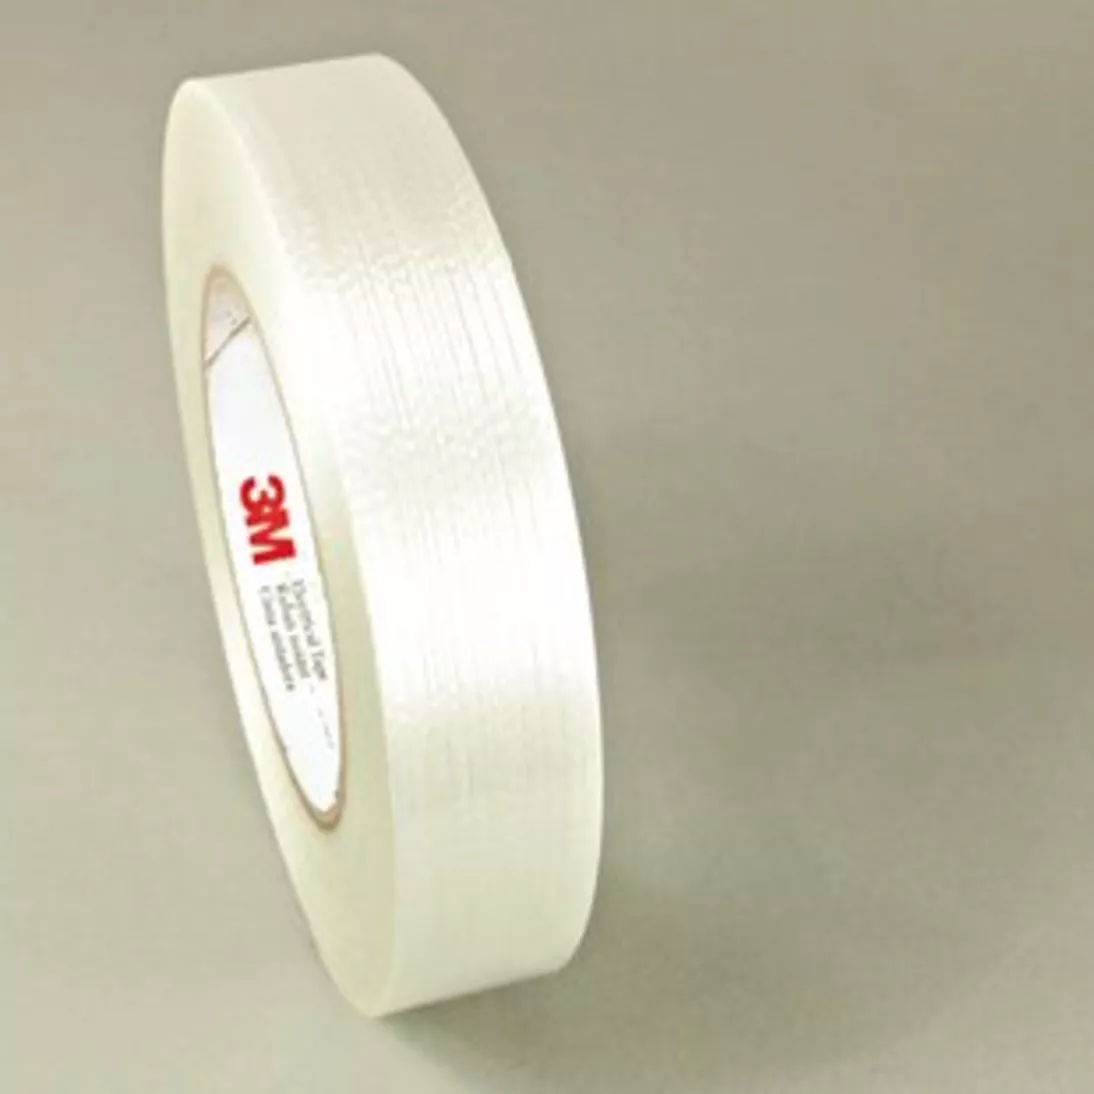 3M™ Filament-Reinforced Electrical Tape 1139, 3/4 in x 60 yd, 48
Rolls/Case